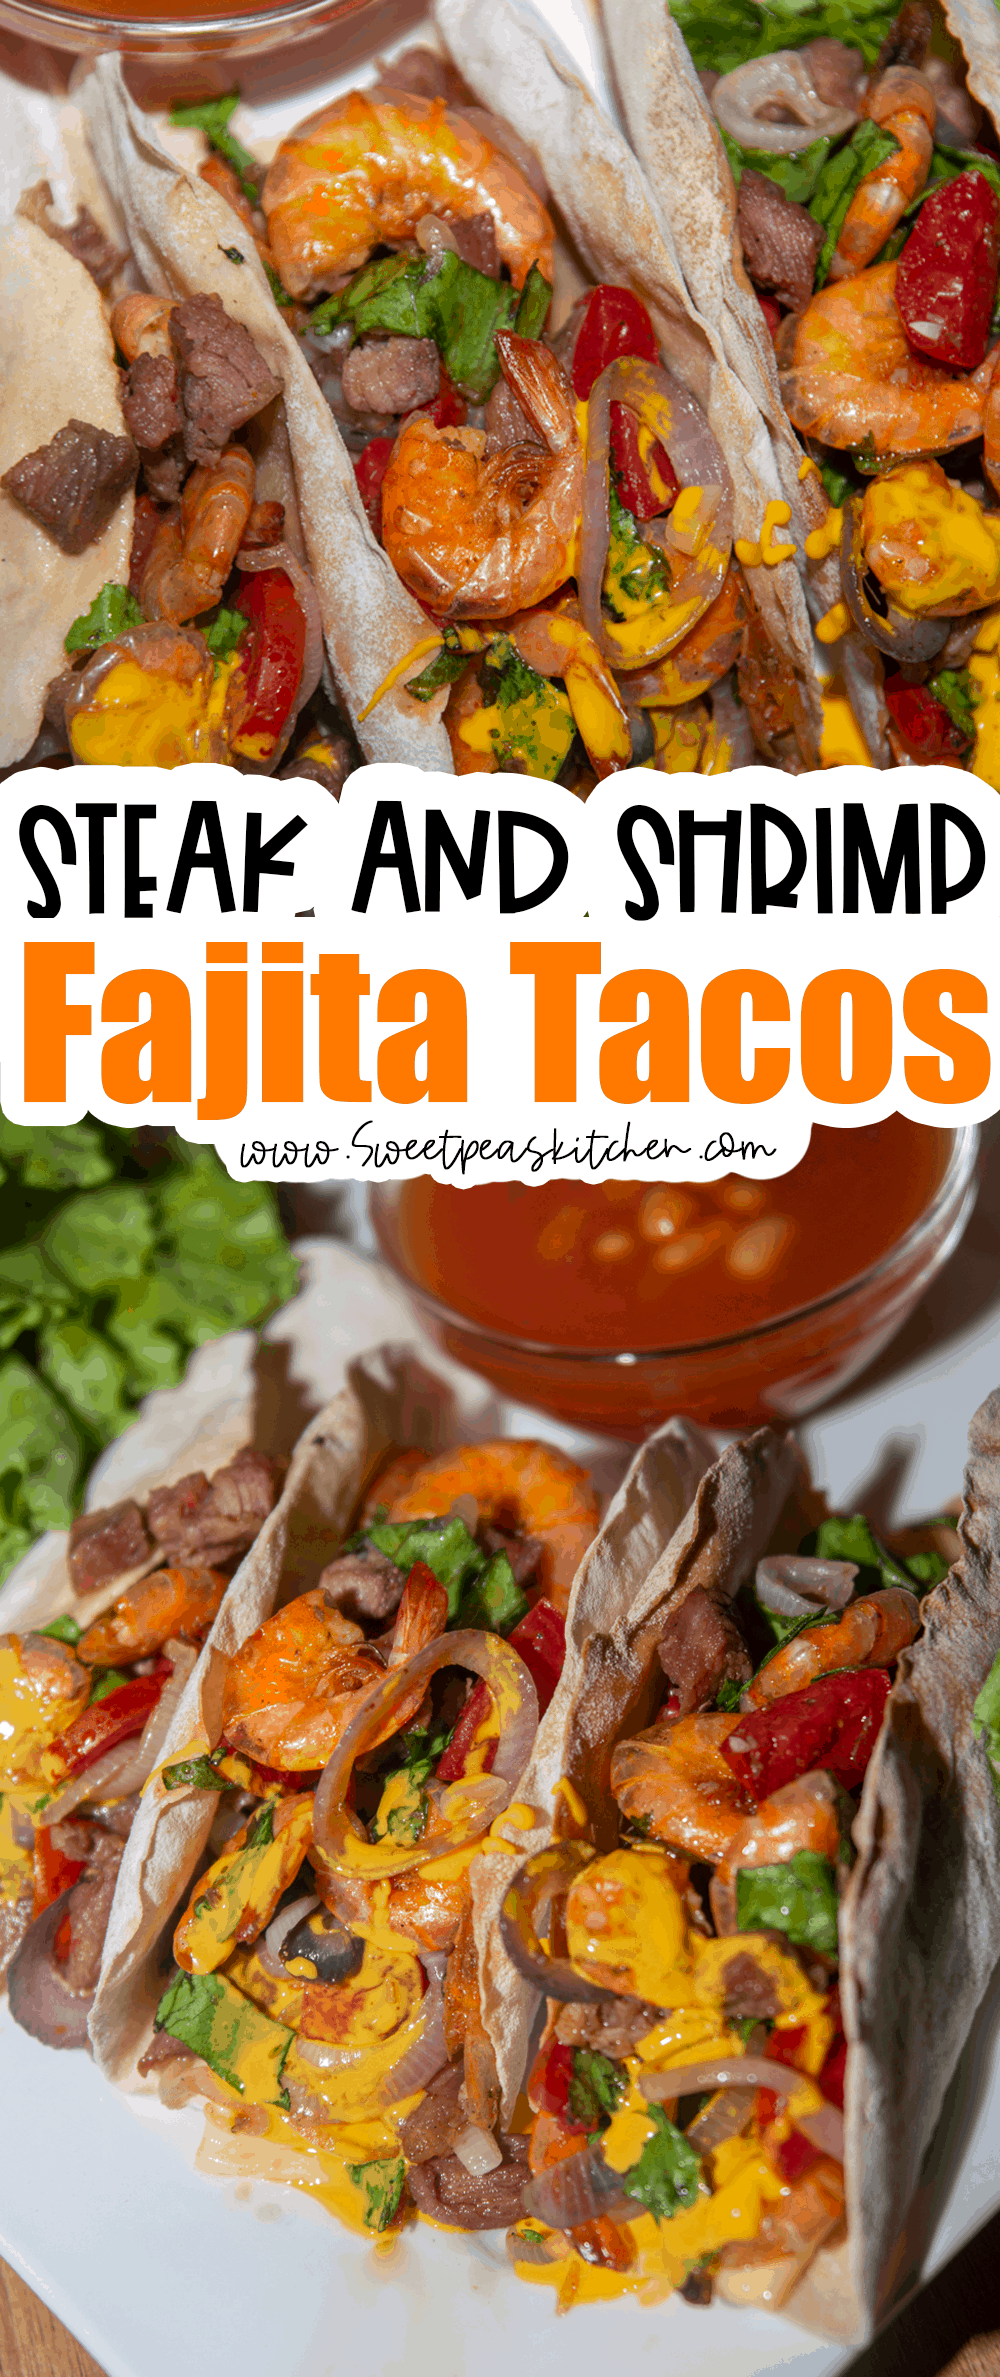 Steak and Shrimp Fajita Tacos on pinterest